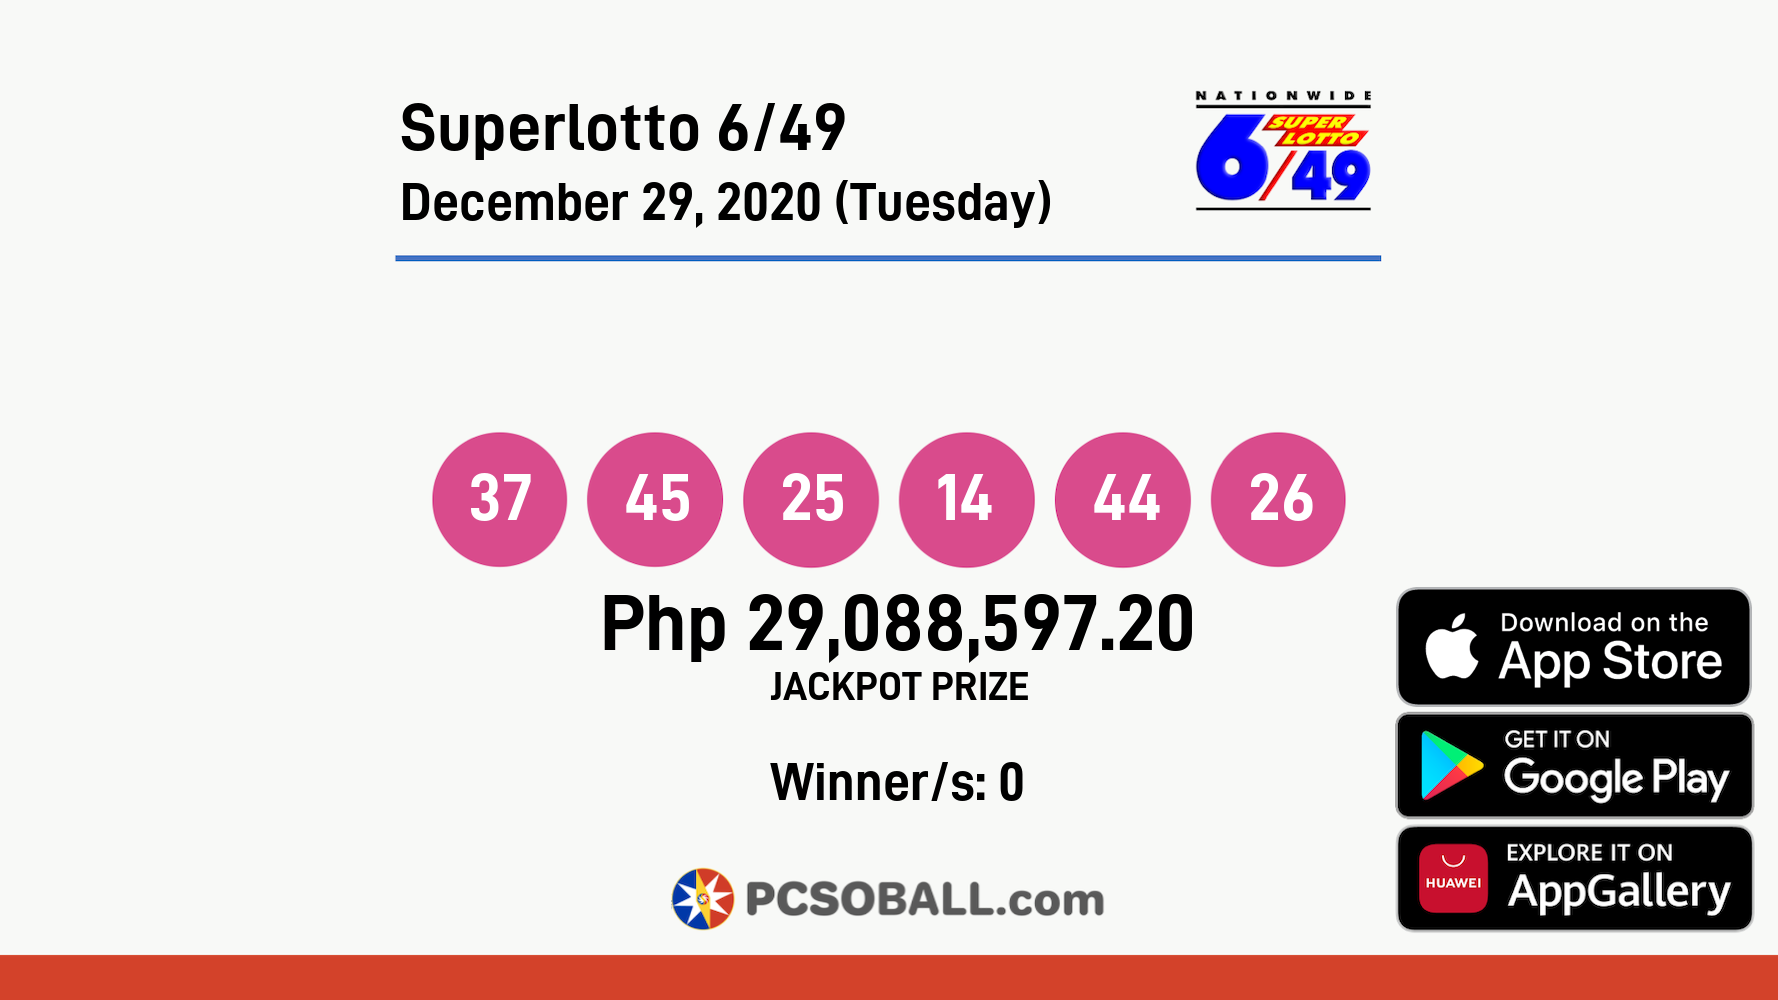 Superlotto 6/49 December 29, 2020 (Tuesday) Result